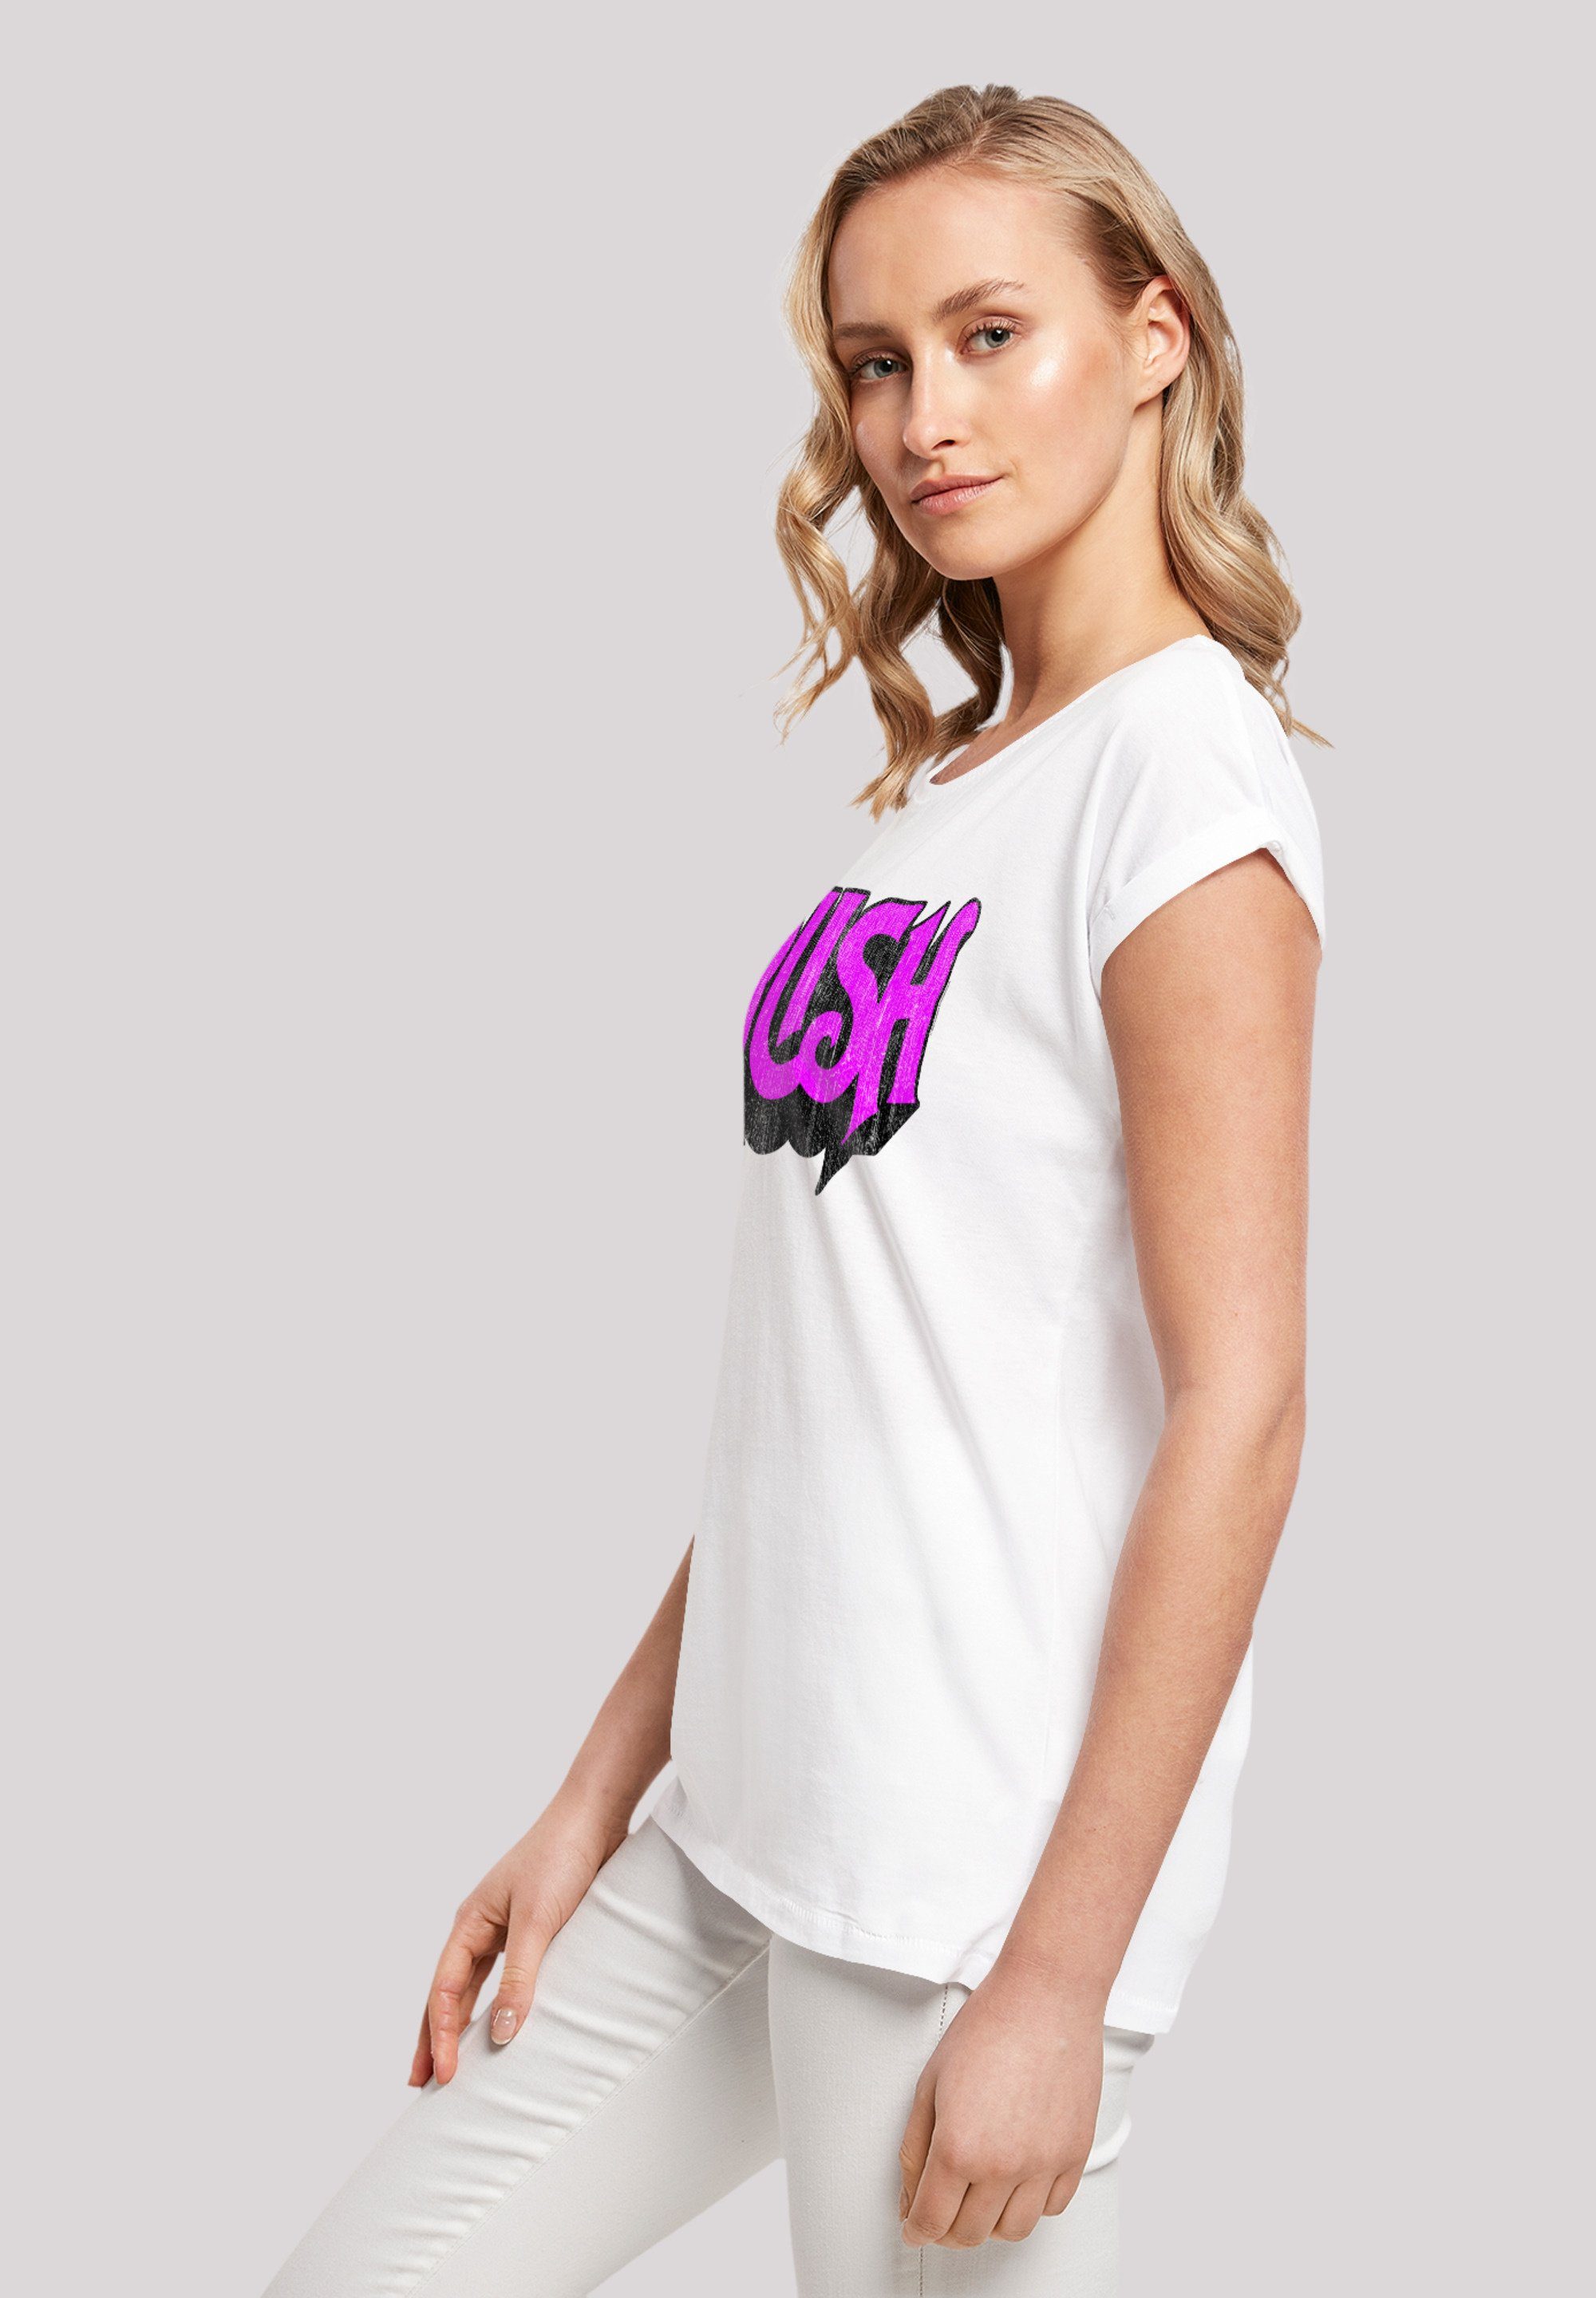 Rock T-Shirt Rush Qualität Band F4NT4STIC Distressed Logo weiß Premium